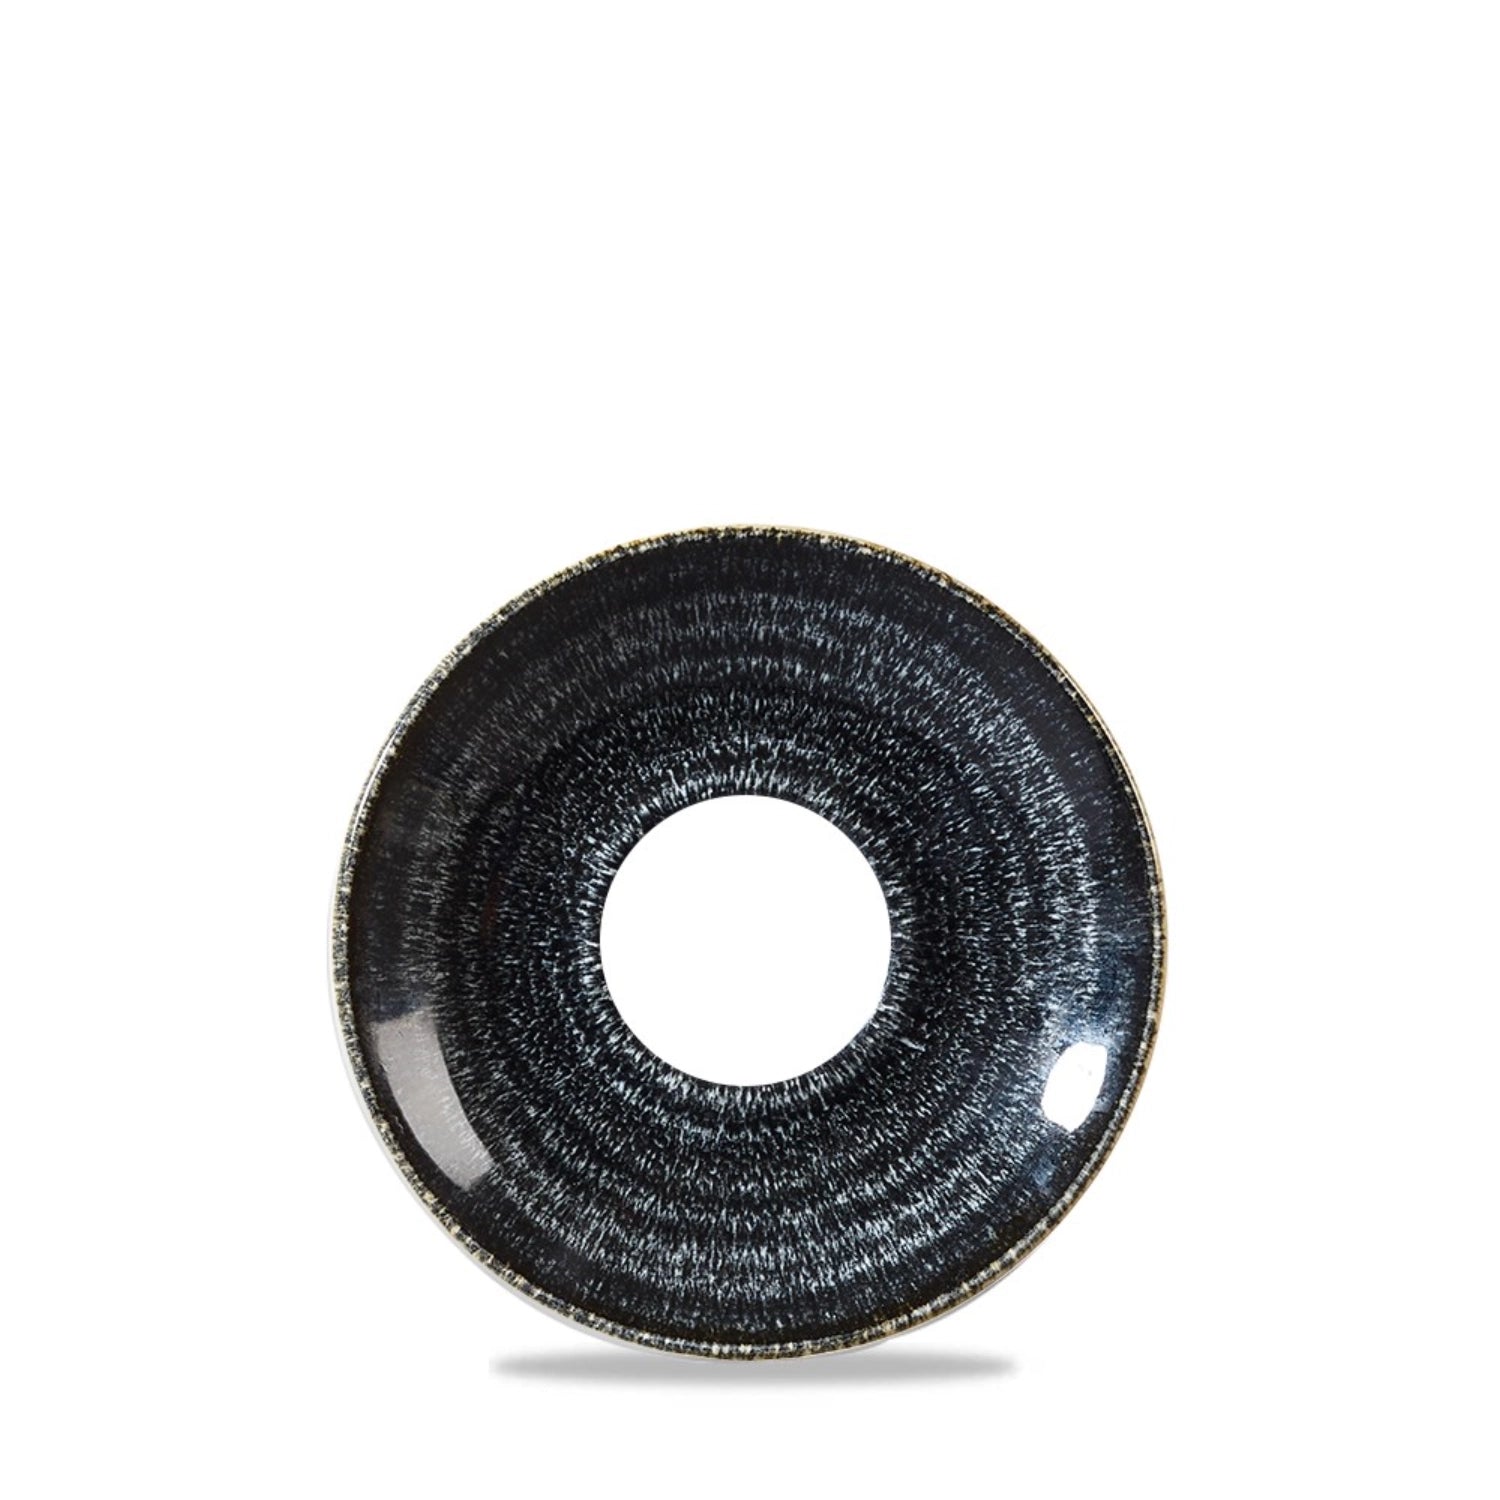 S.P. Homespun Charcoal Black Untertasse 15.6cm - KAQTU Design